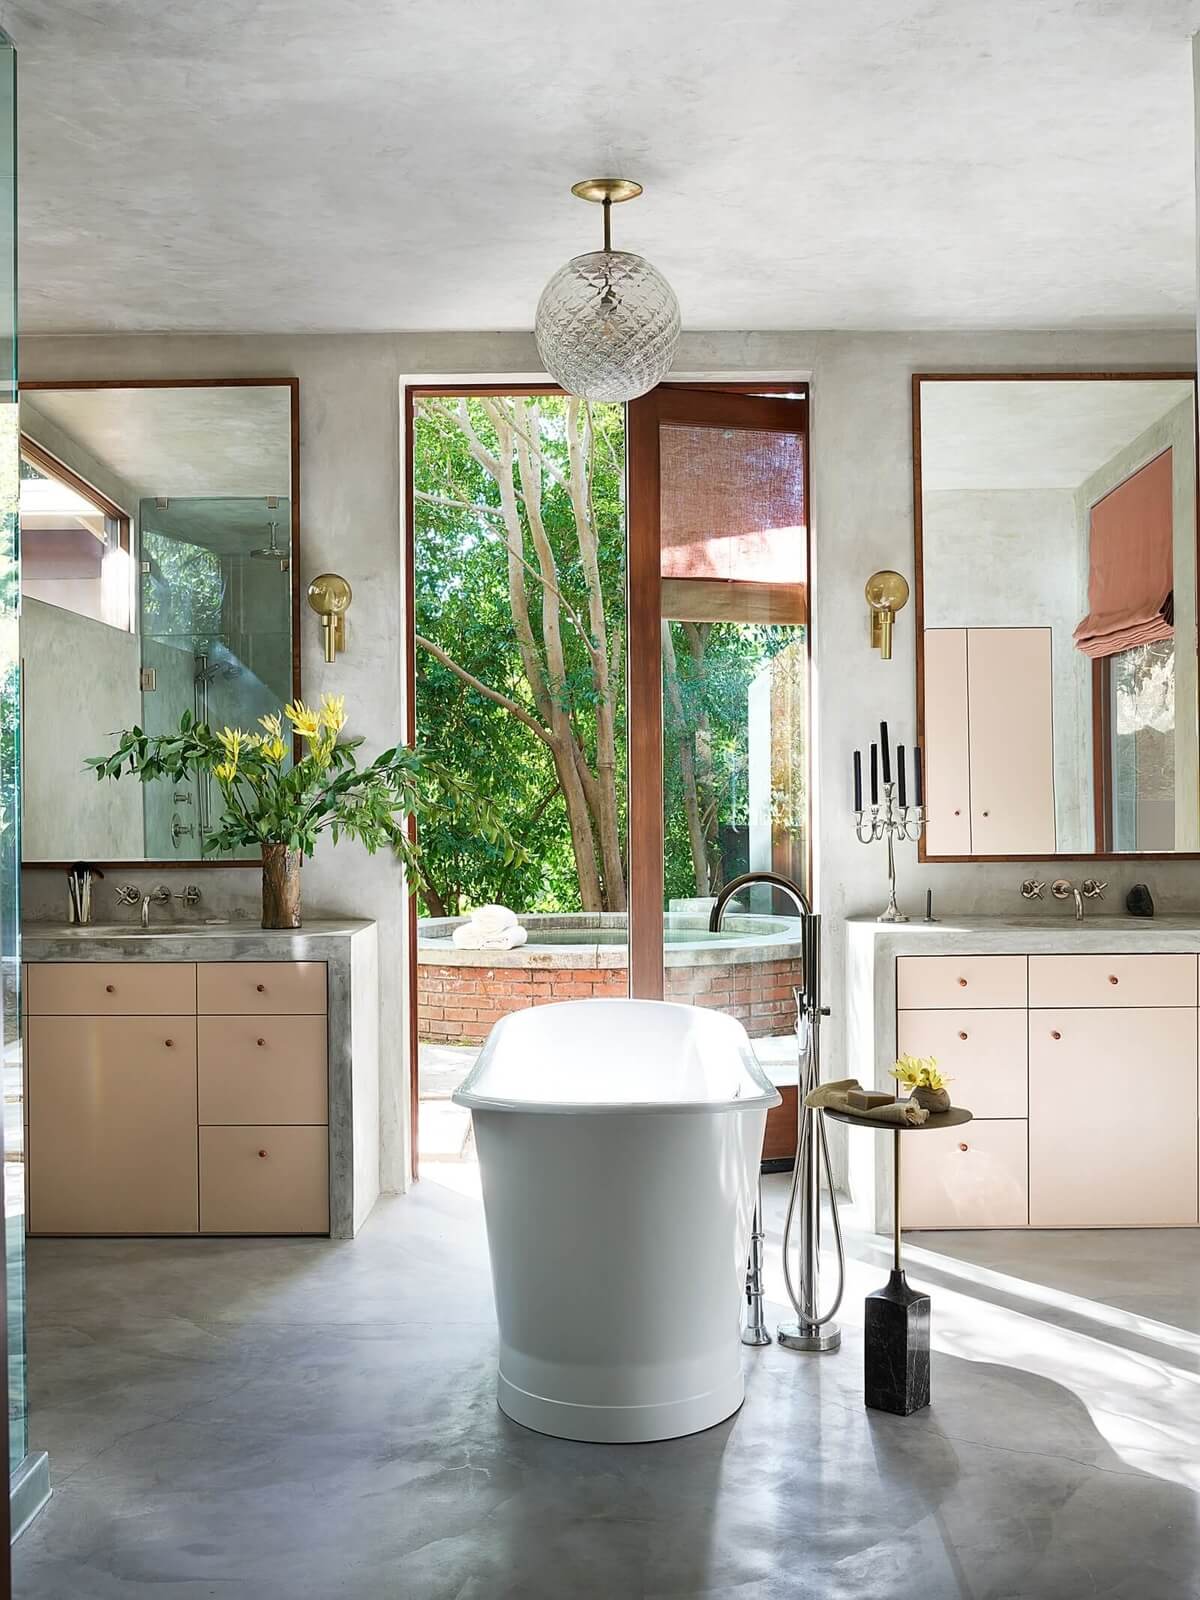 dakota johnson's midcentury modern home in Los Angeles - how to design a bathroom